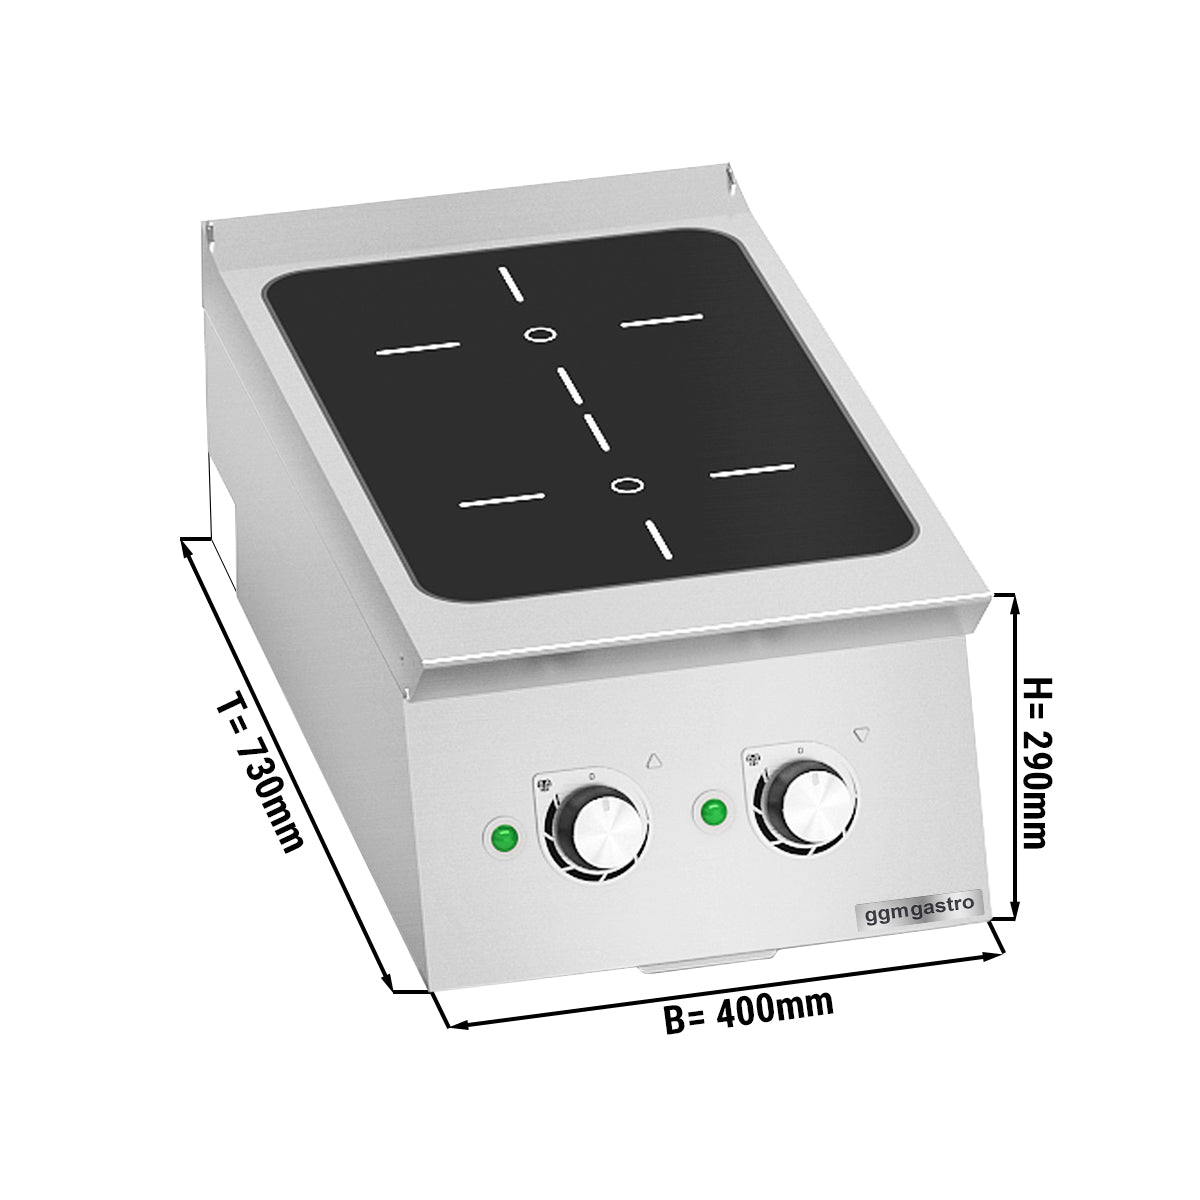 Induksjonsplate - 2 kokeplater (7 kW)